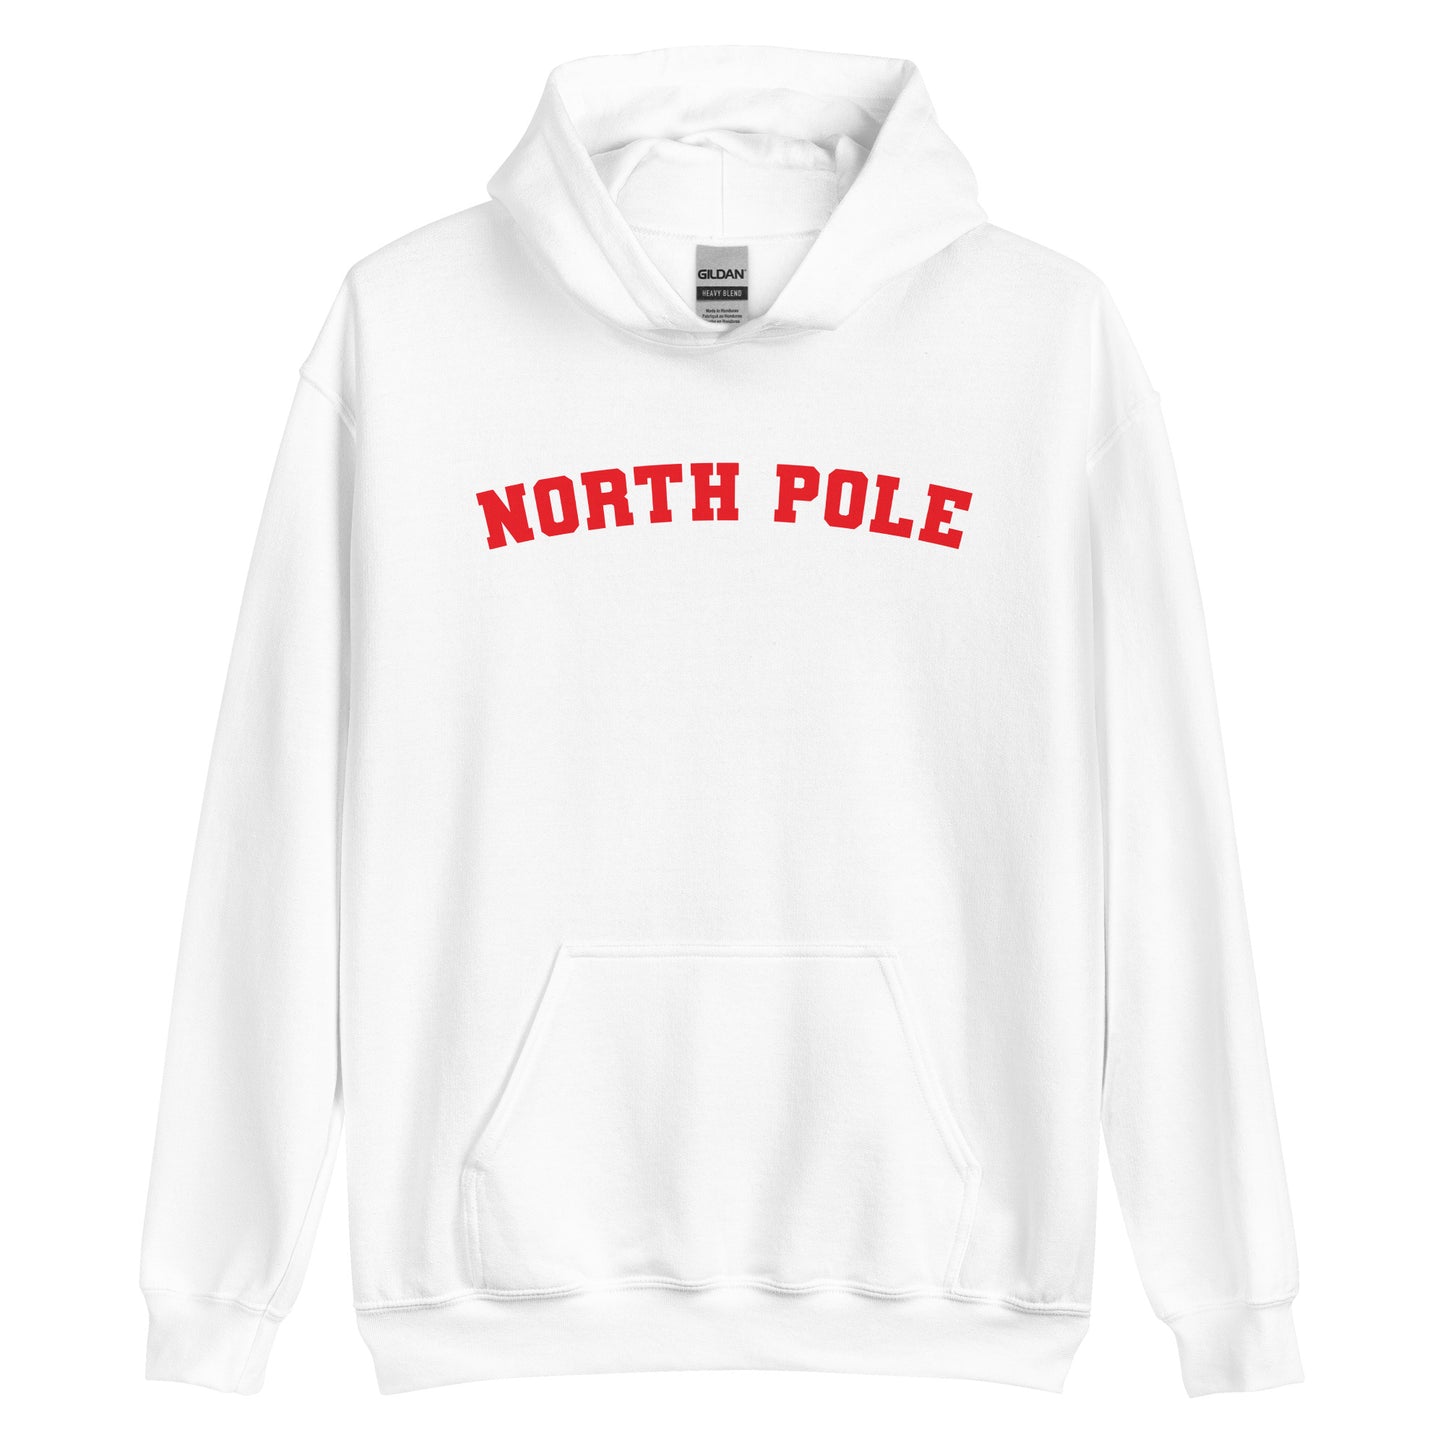 North Pole Hoodie